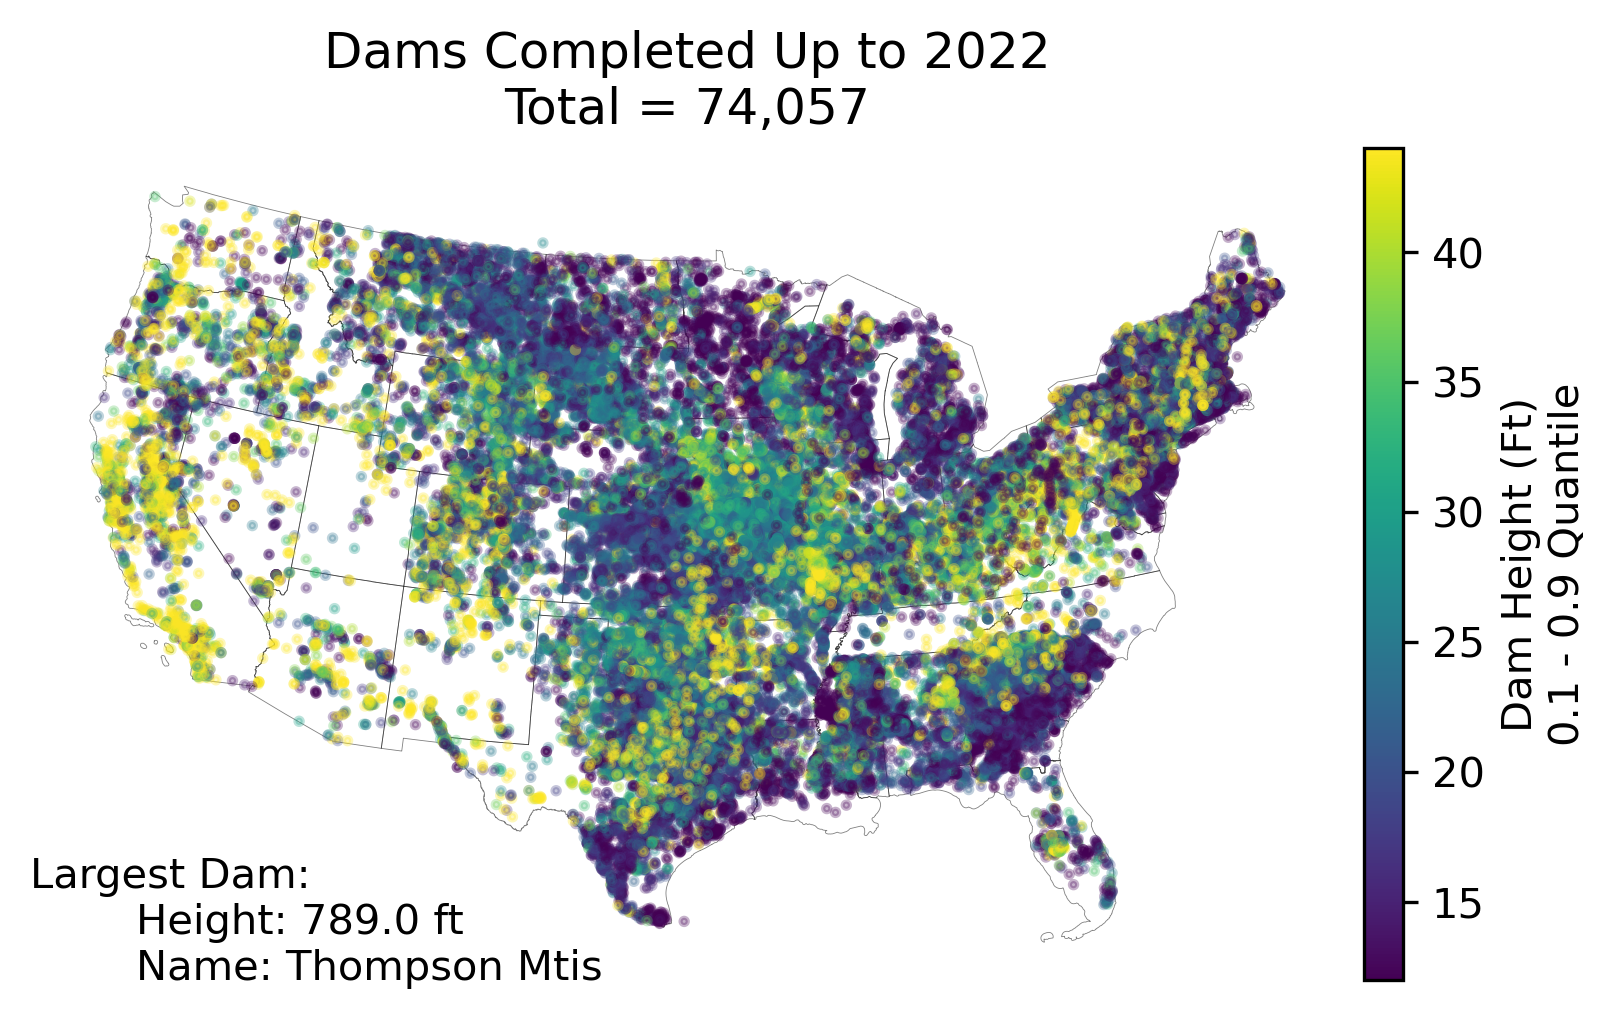 Spatiotemporal Distribution of Dams